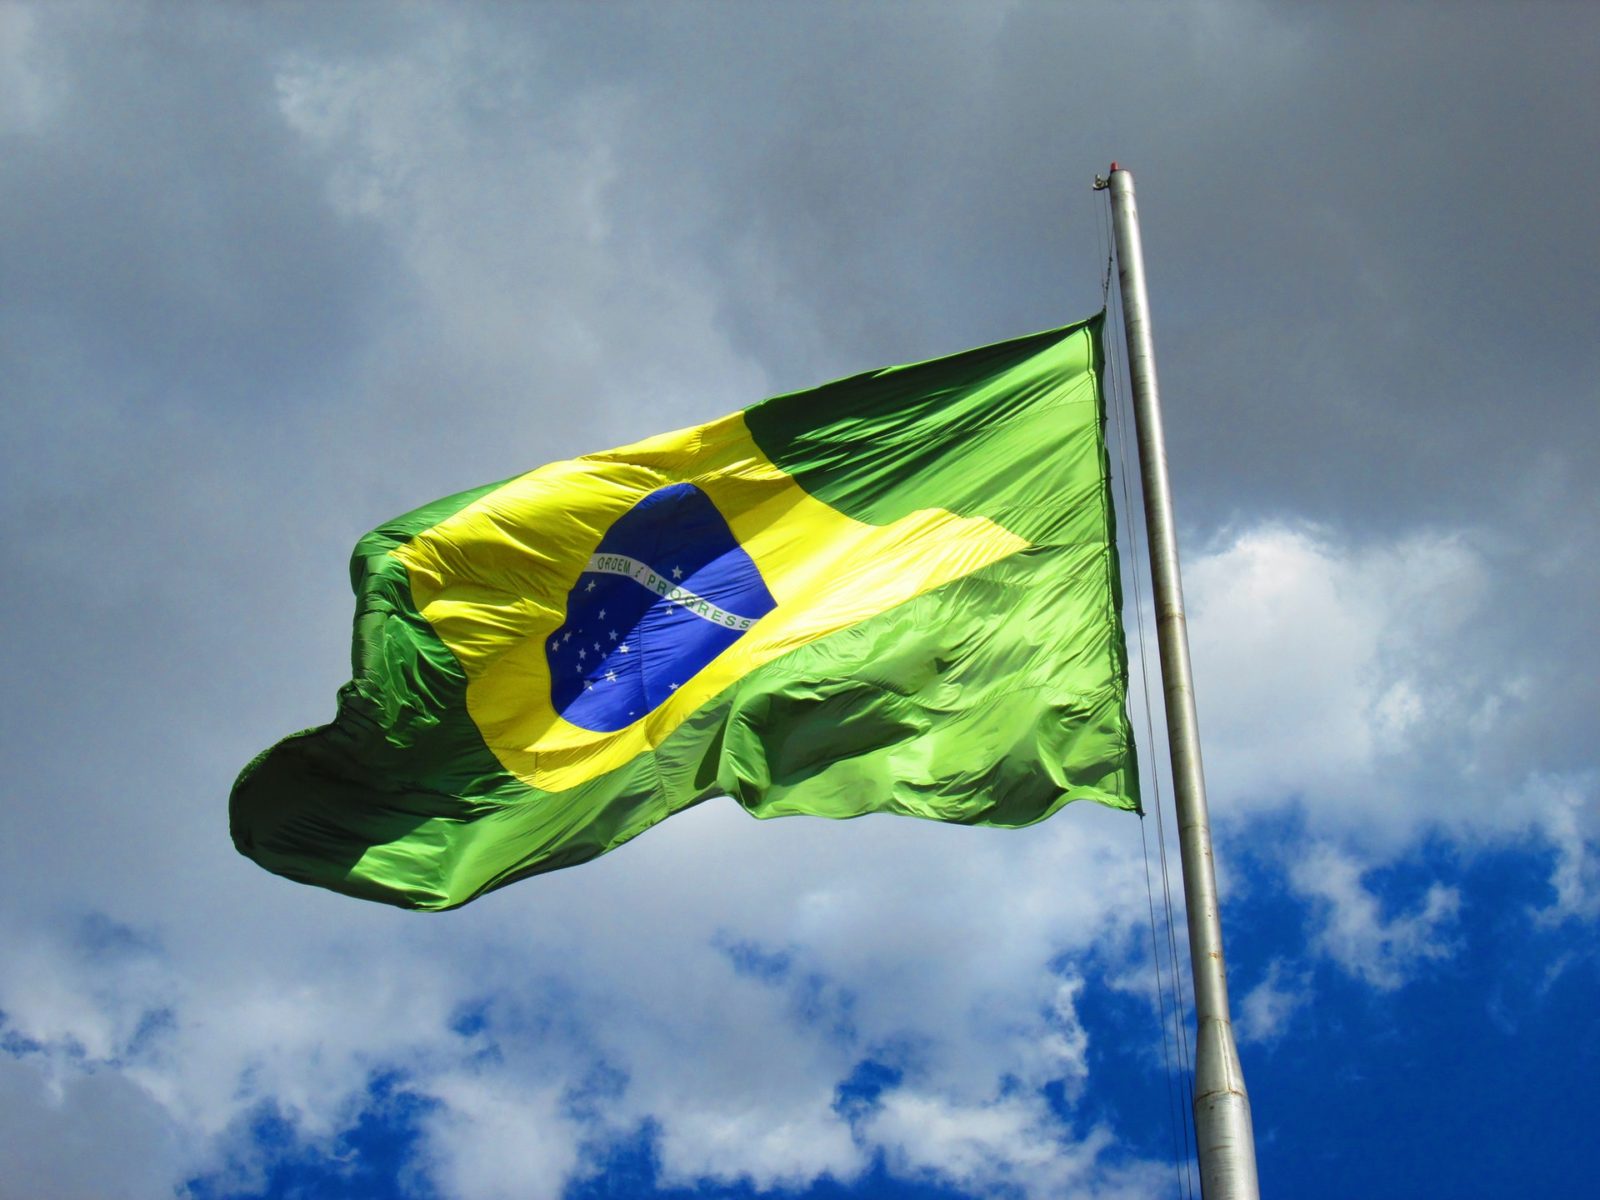 Bolsonaro’s Brazil: So-Called “Trump of the Tropics” Could Inspire an Emerging Market Turnaround